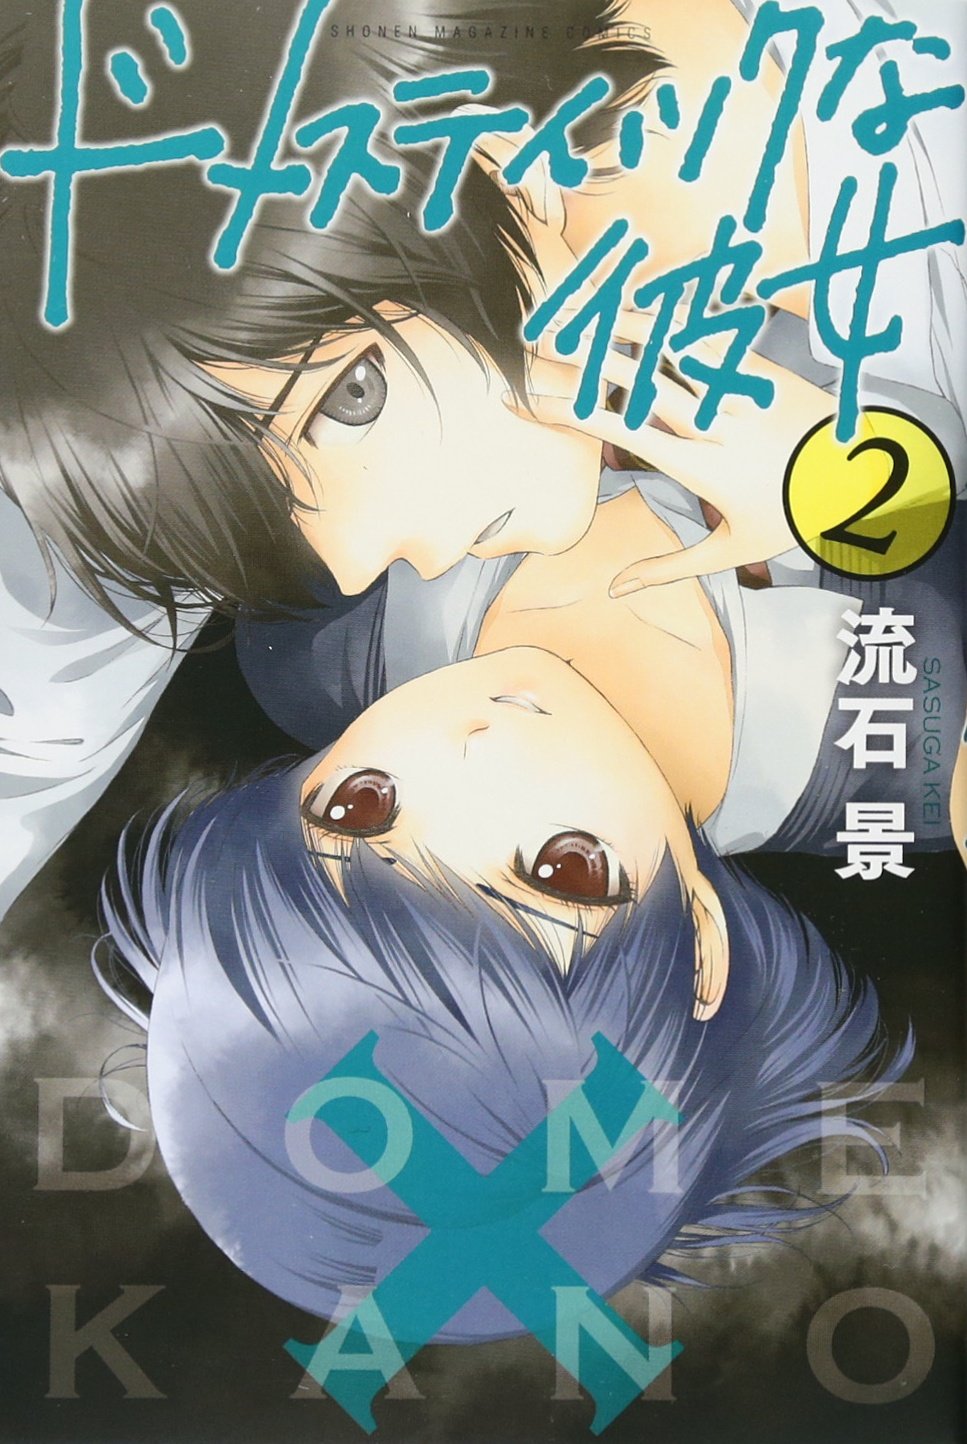 Domestic Girlfriend Volume 26 (Domestic na Kanojo) - Manga Store 